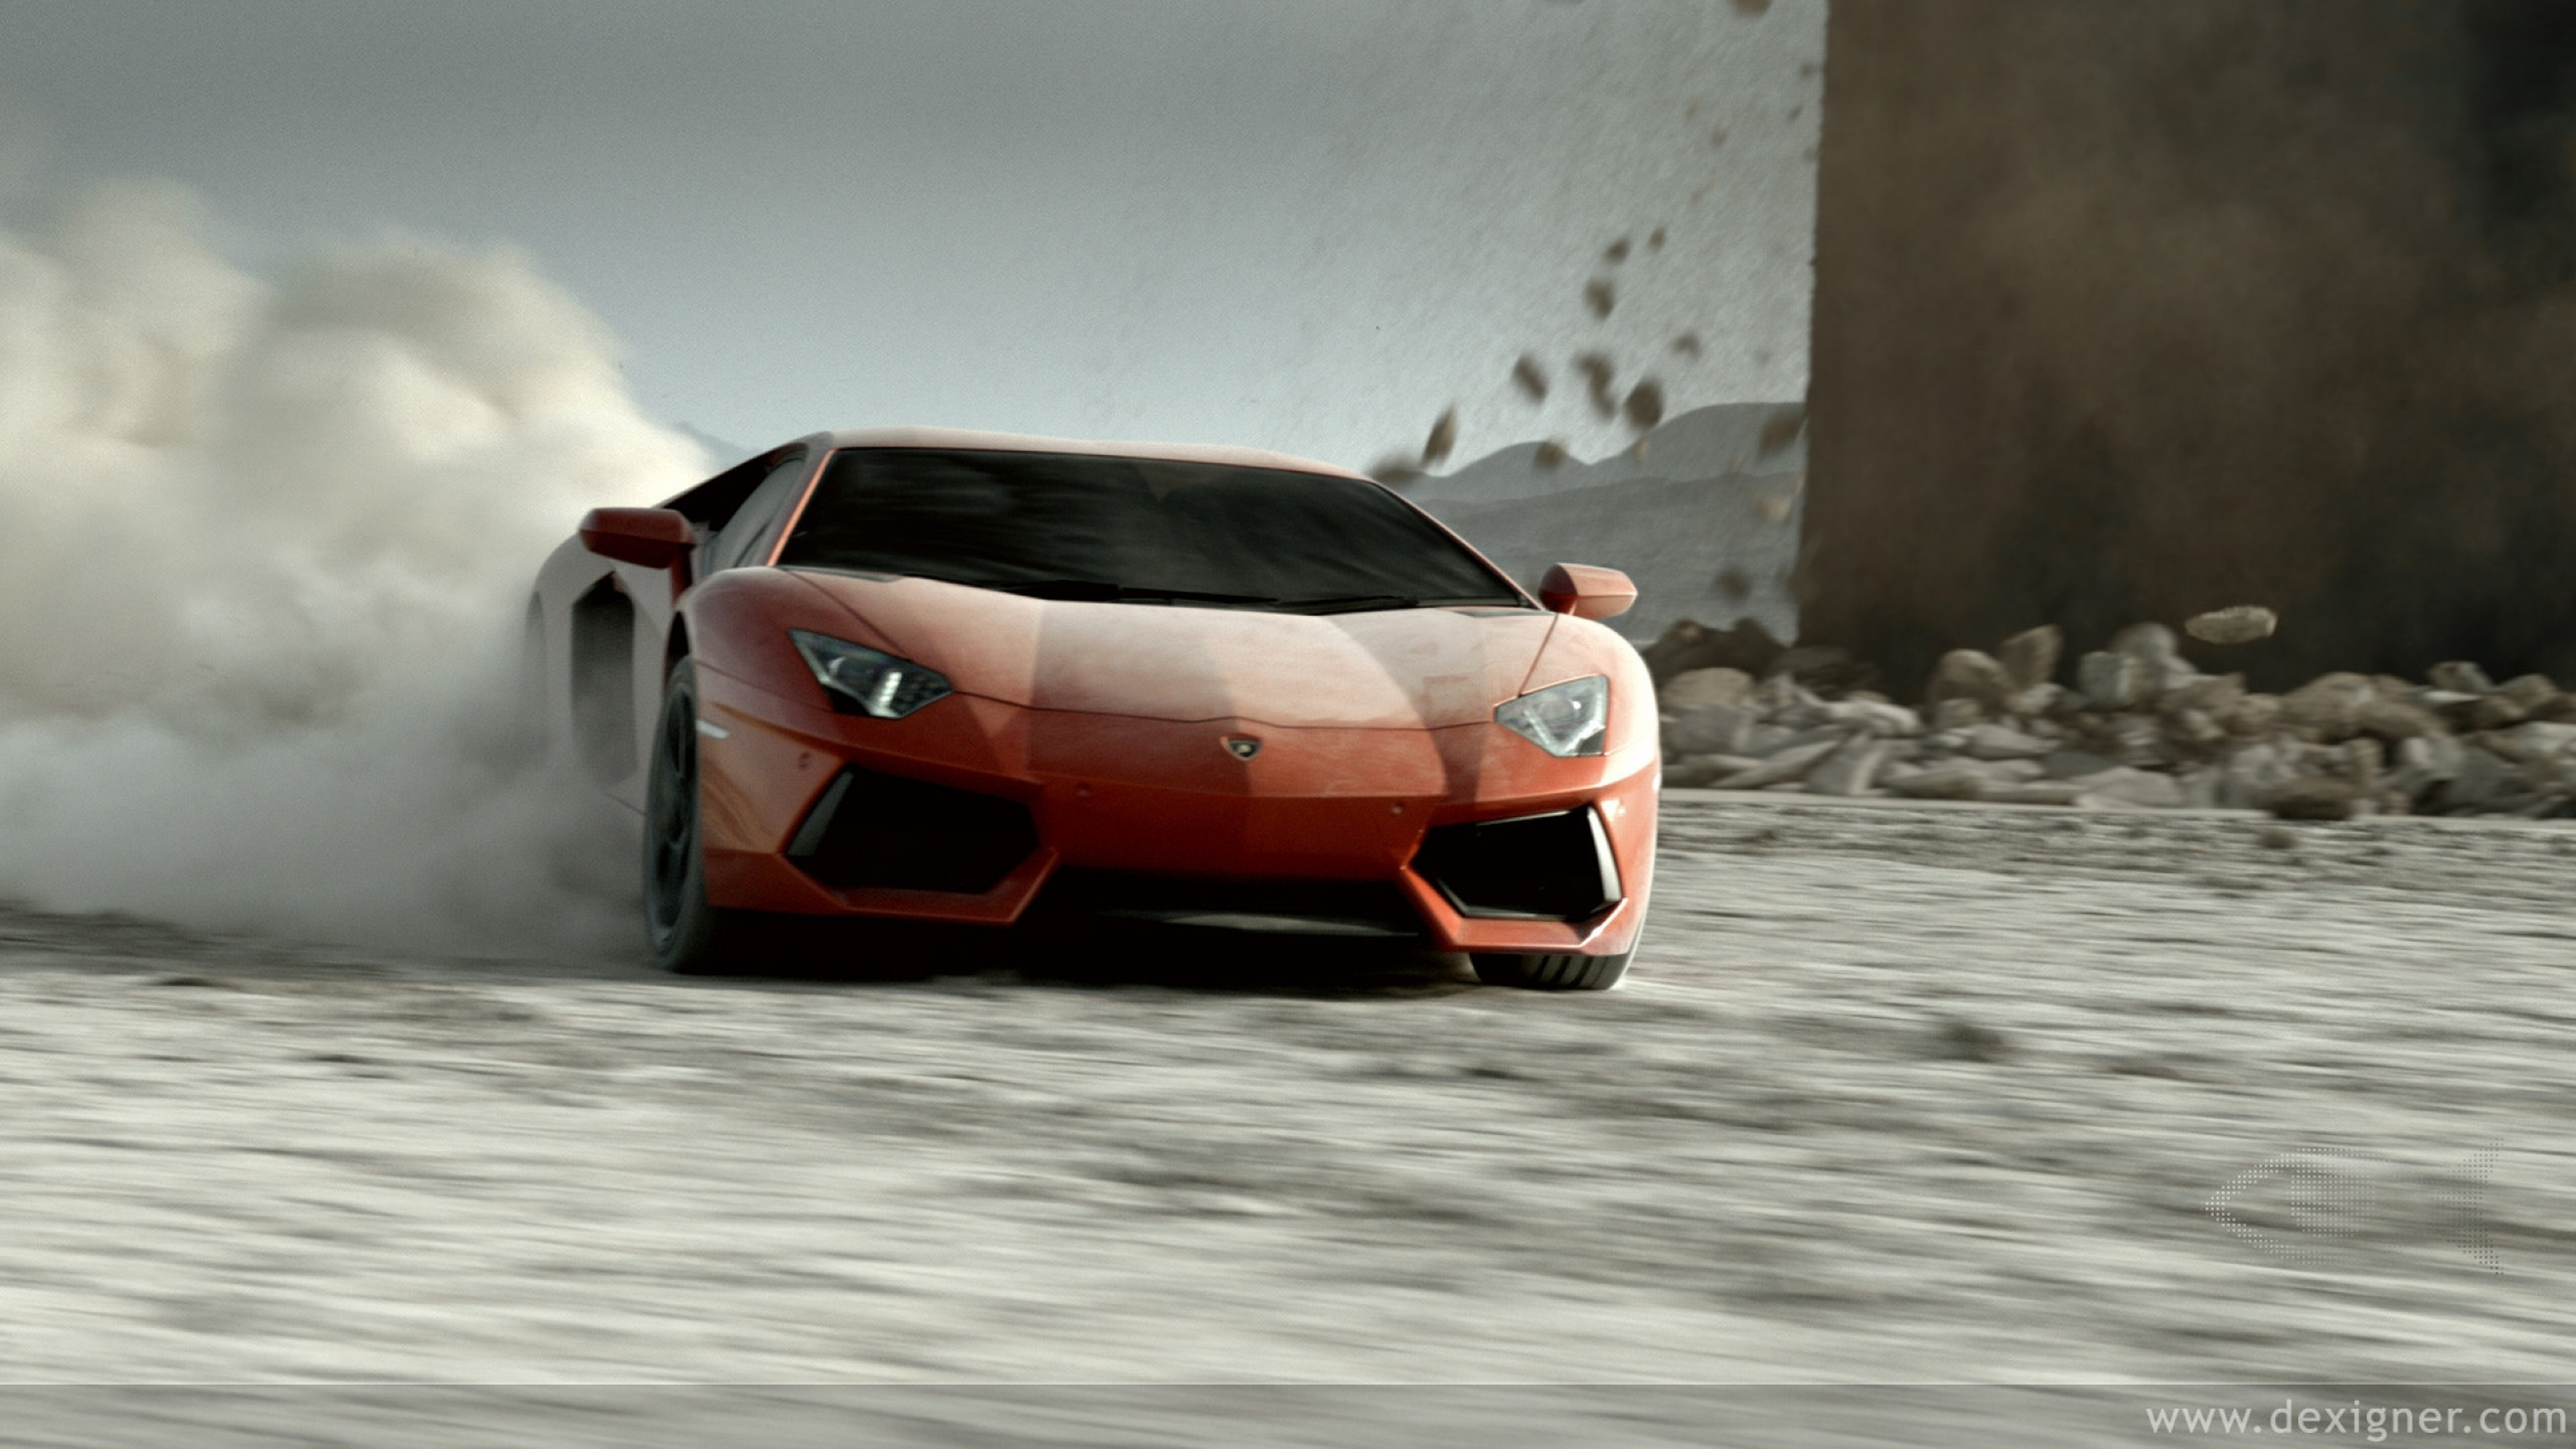 3840x2160 Lamborghini aventador v12 Ultra HD 4K Wallpapers | Cars